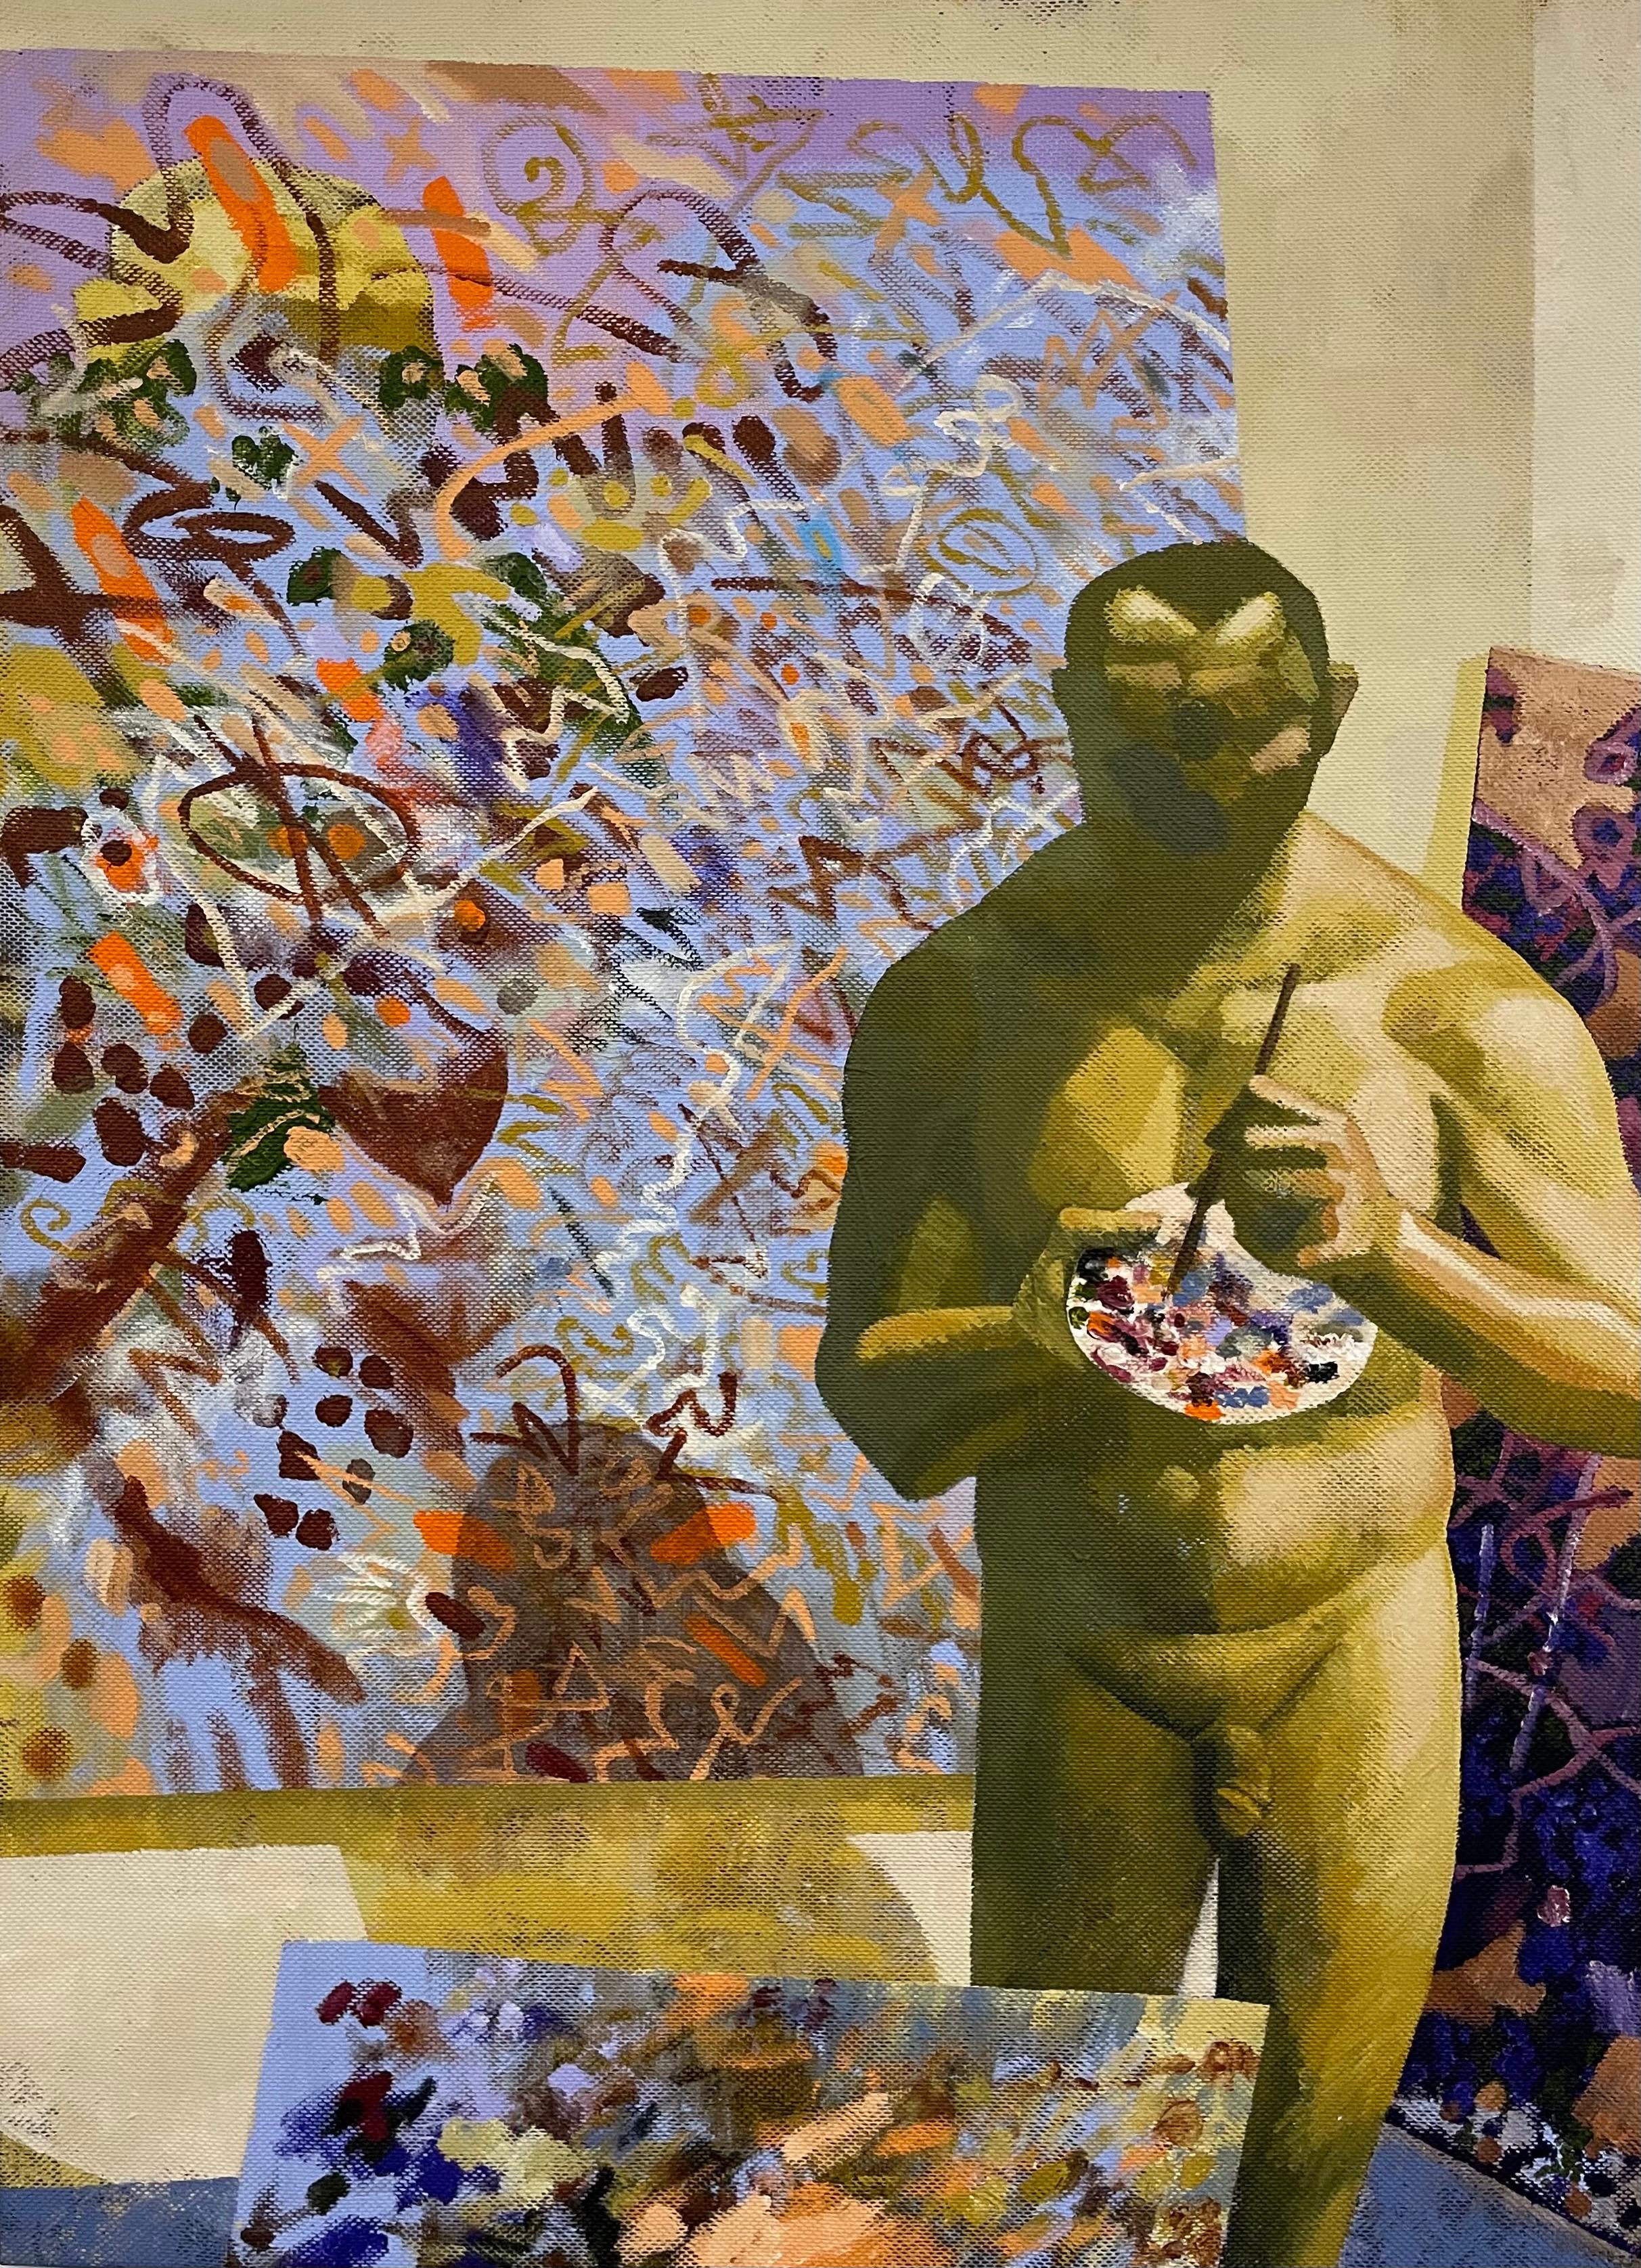 Alexandru Rădvan Figurative Painting - Le Chef d'oeuvre inconnu - 21st Century, Male, Nude, Contemporary, Yellow